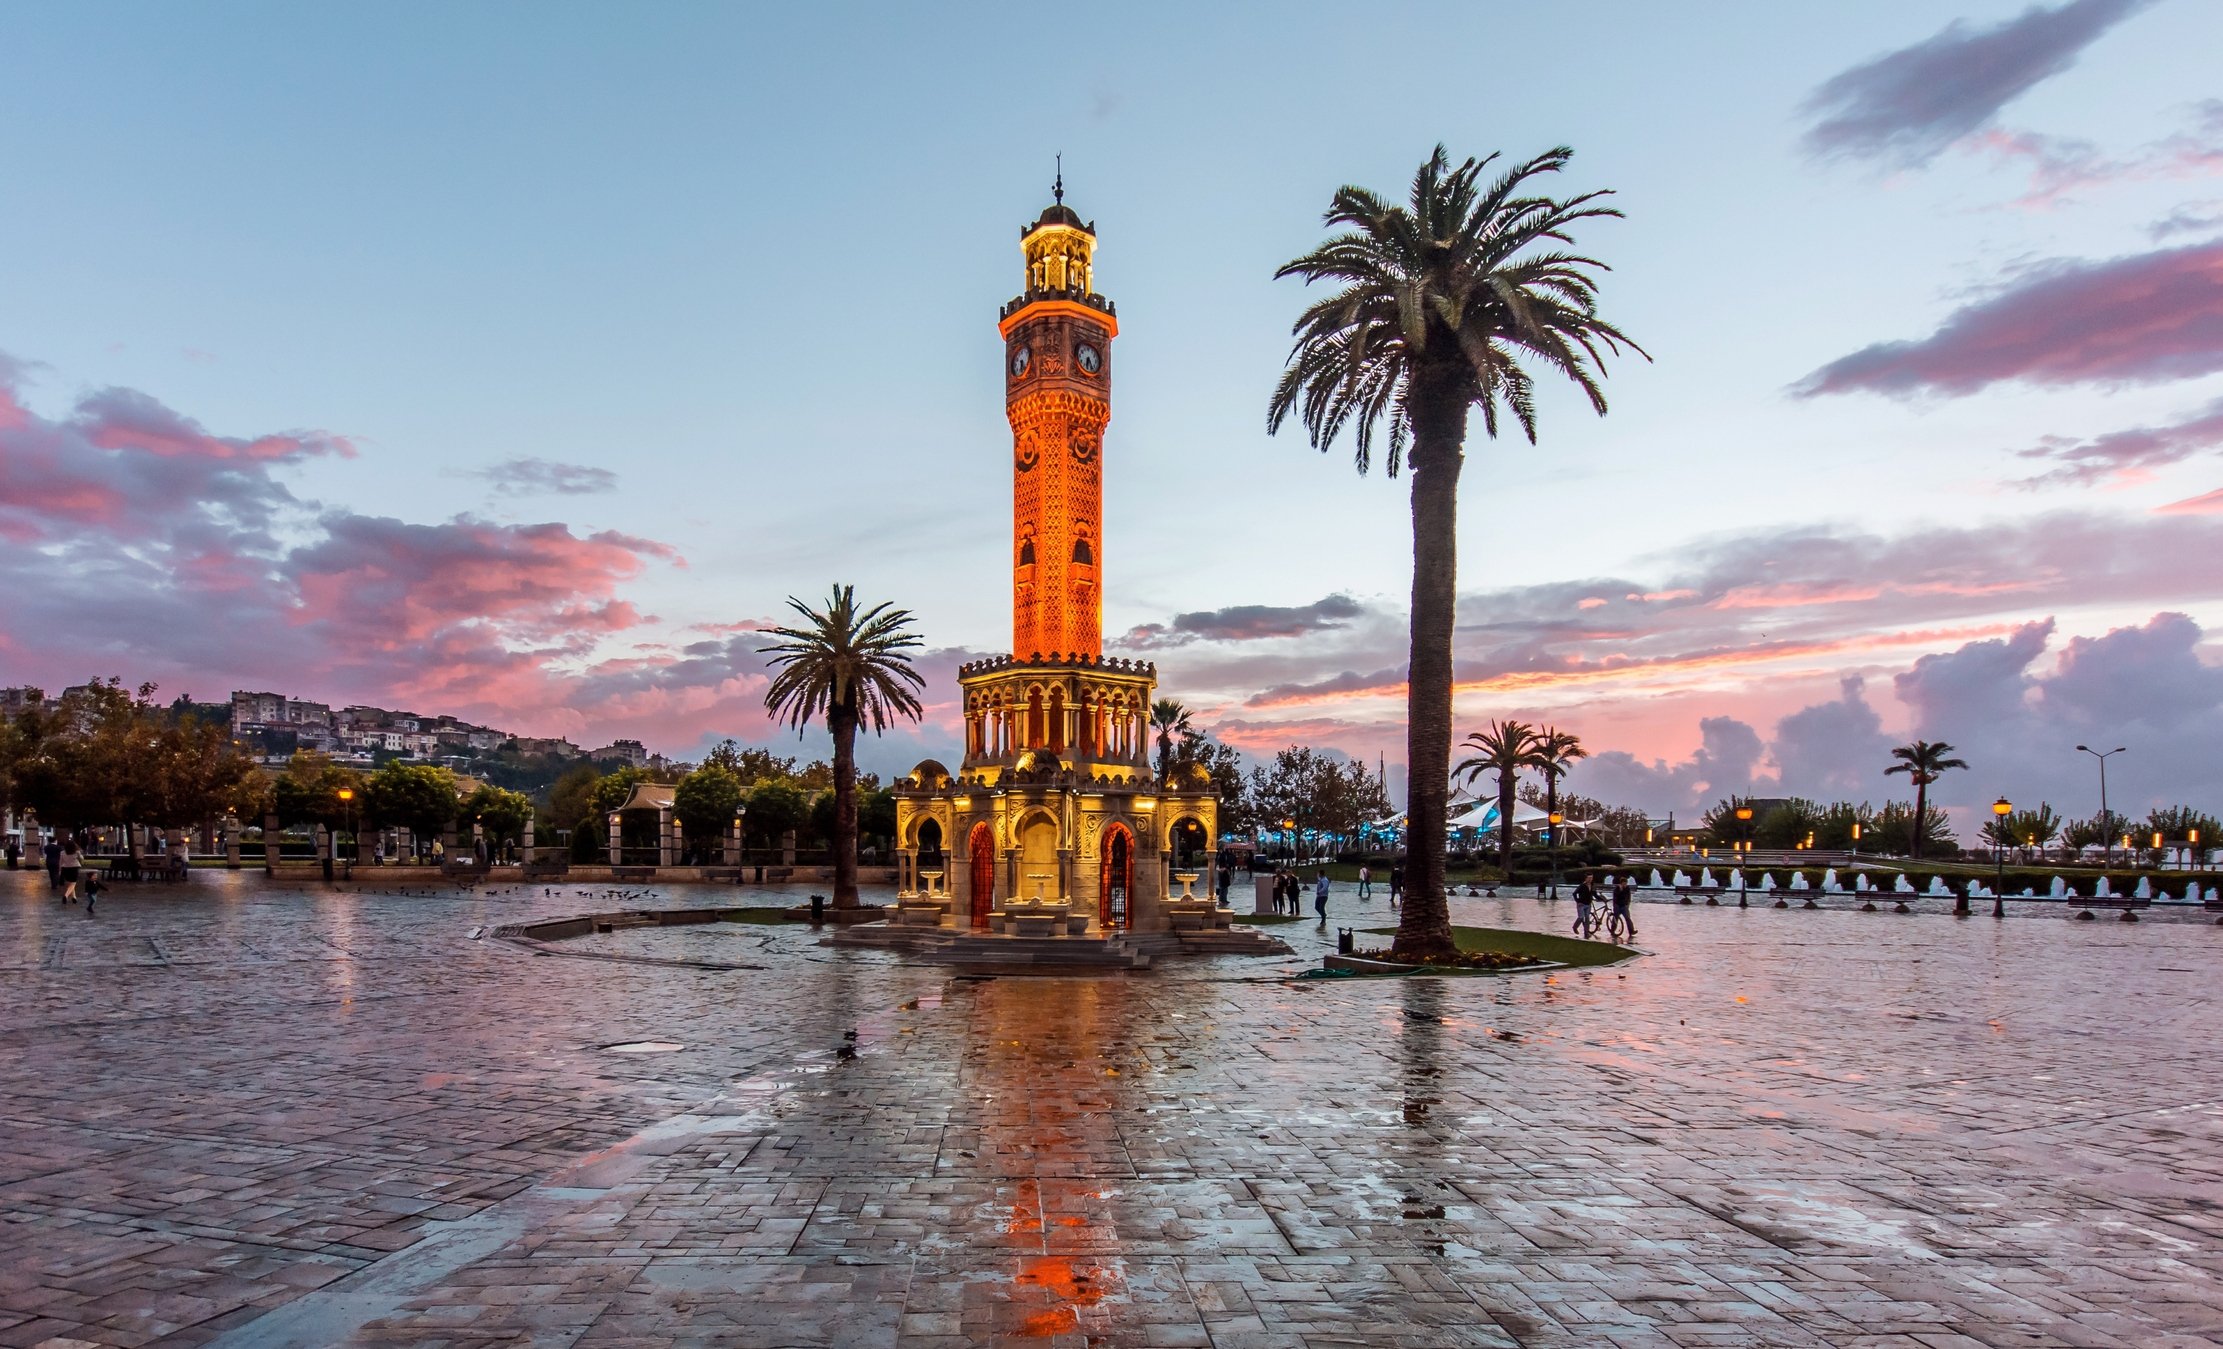 The iconic clock tower in Konak Square in Izmir, southwestern Turkey. (iStock Photo)